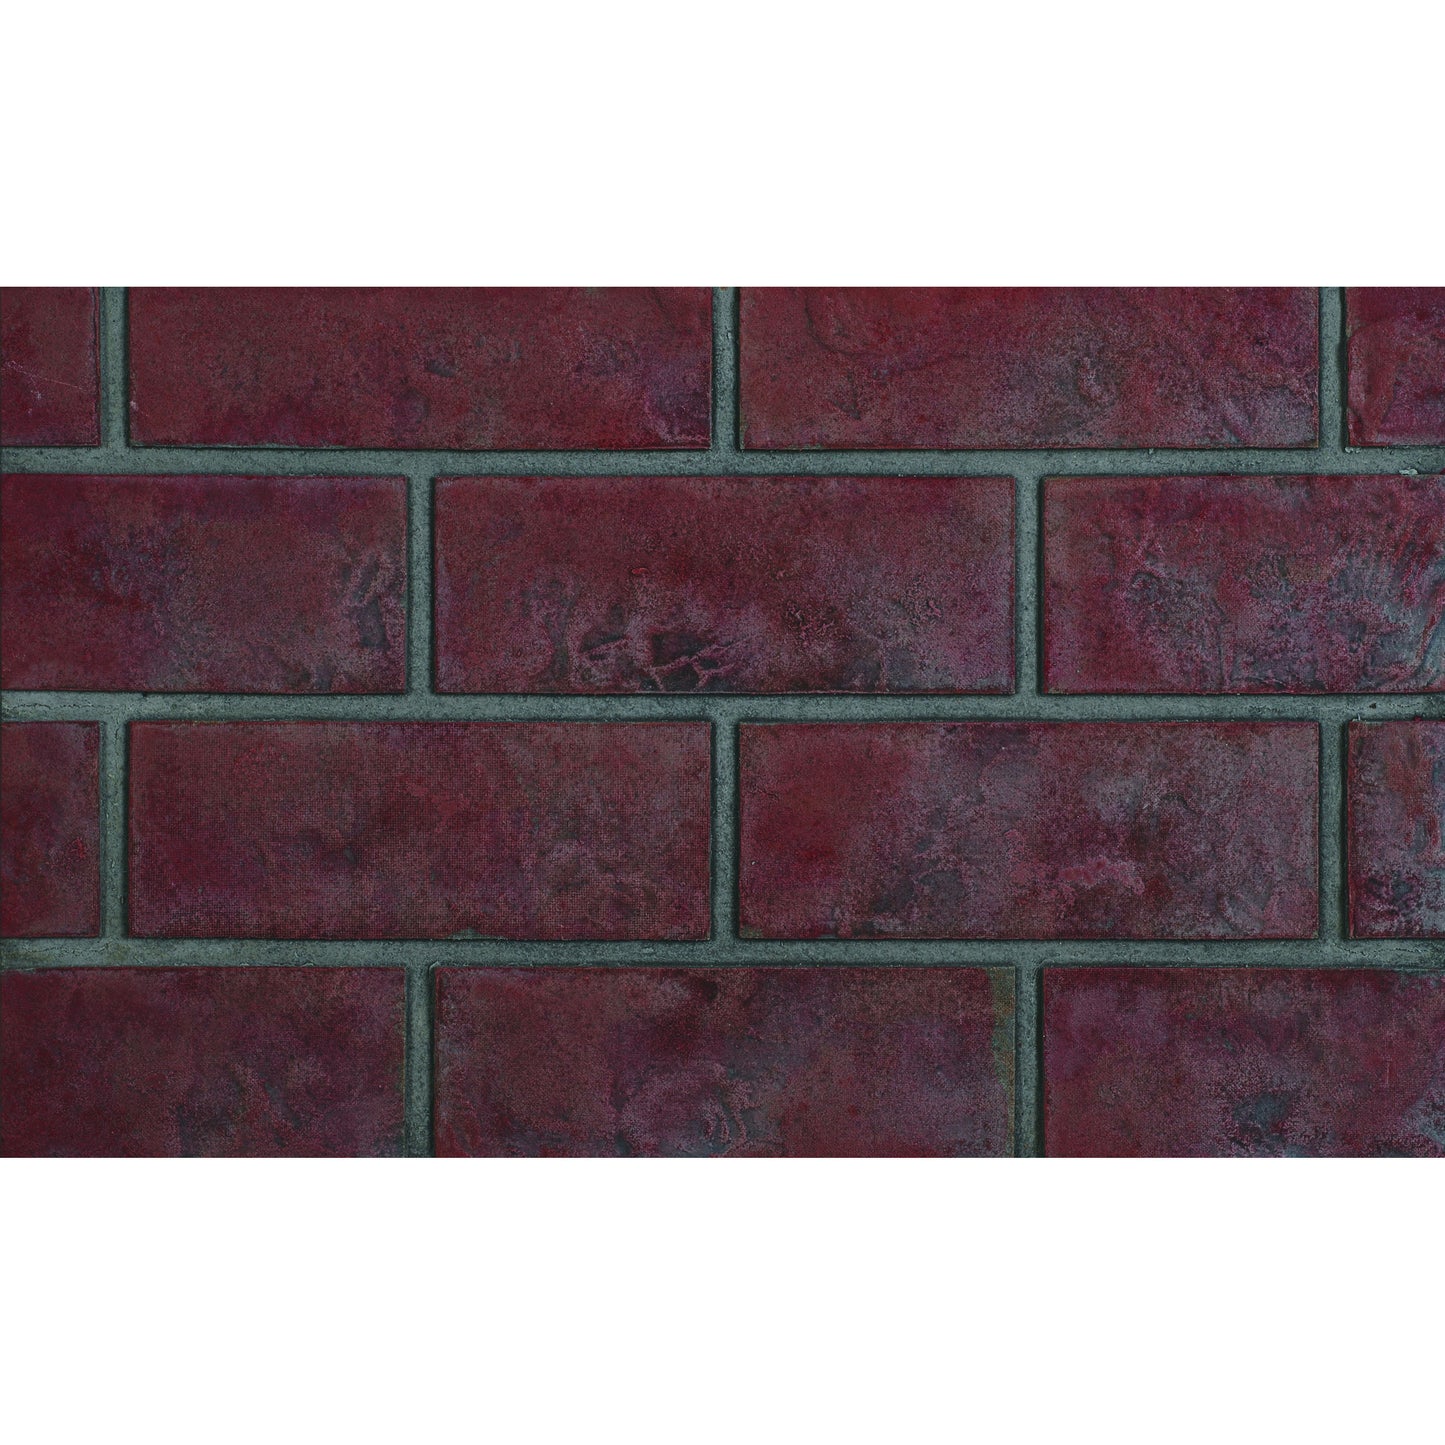 NAPDBPX36OS | Napoleon Decorative Brick Panels | Old Town Red Standard Brick Pattern